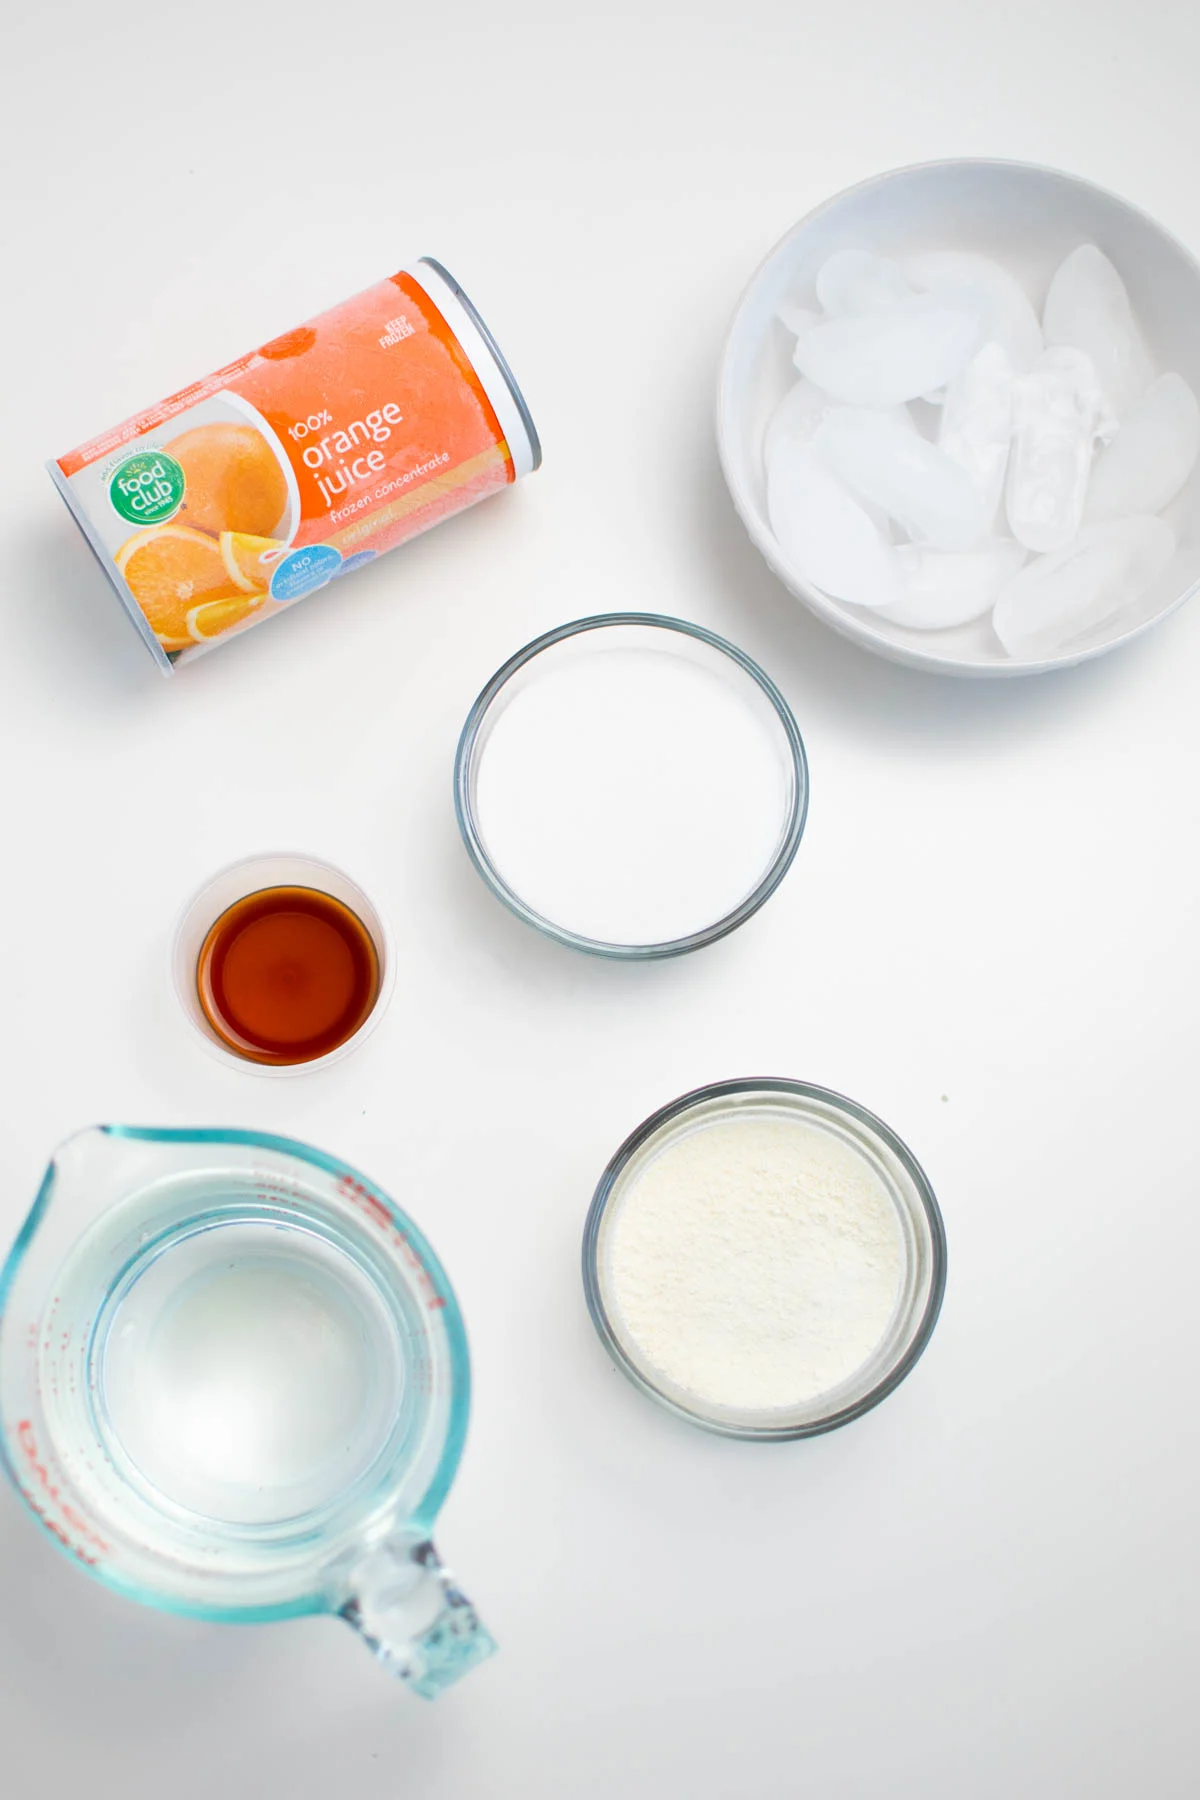 Orange Julius ingredients in bowls including ice cubes, sugar, and milk.